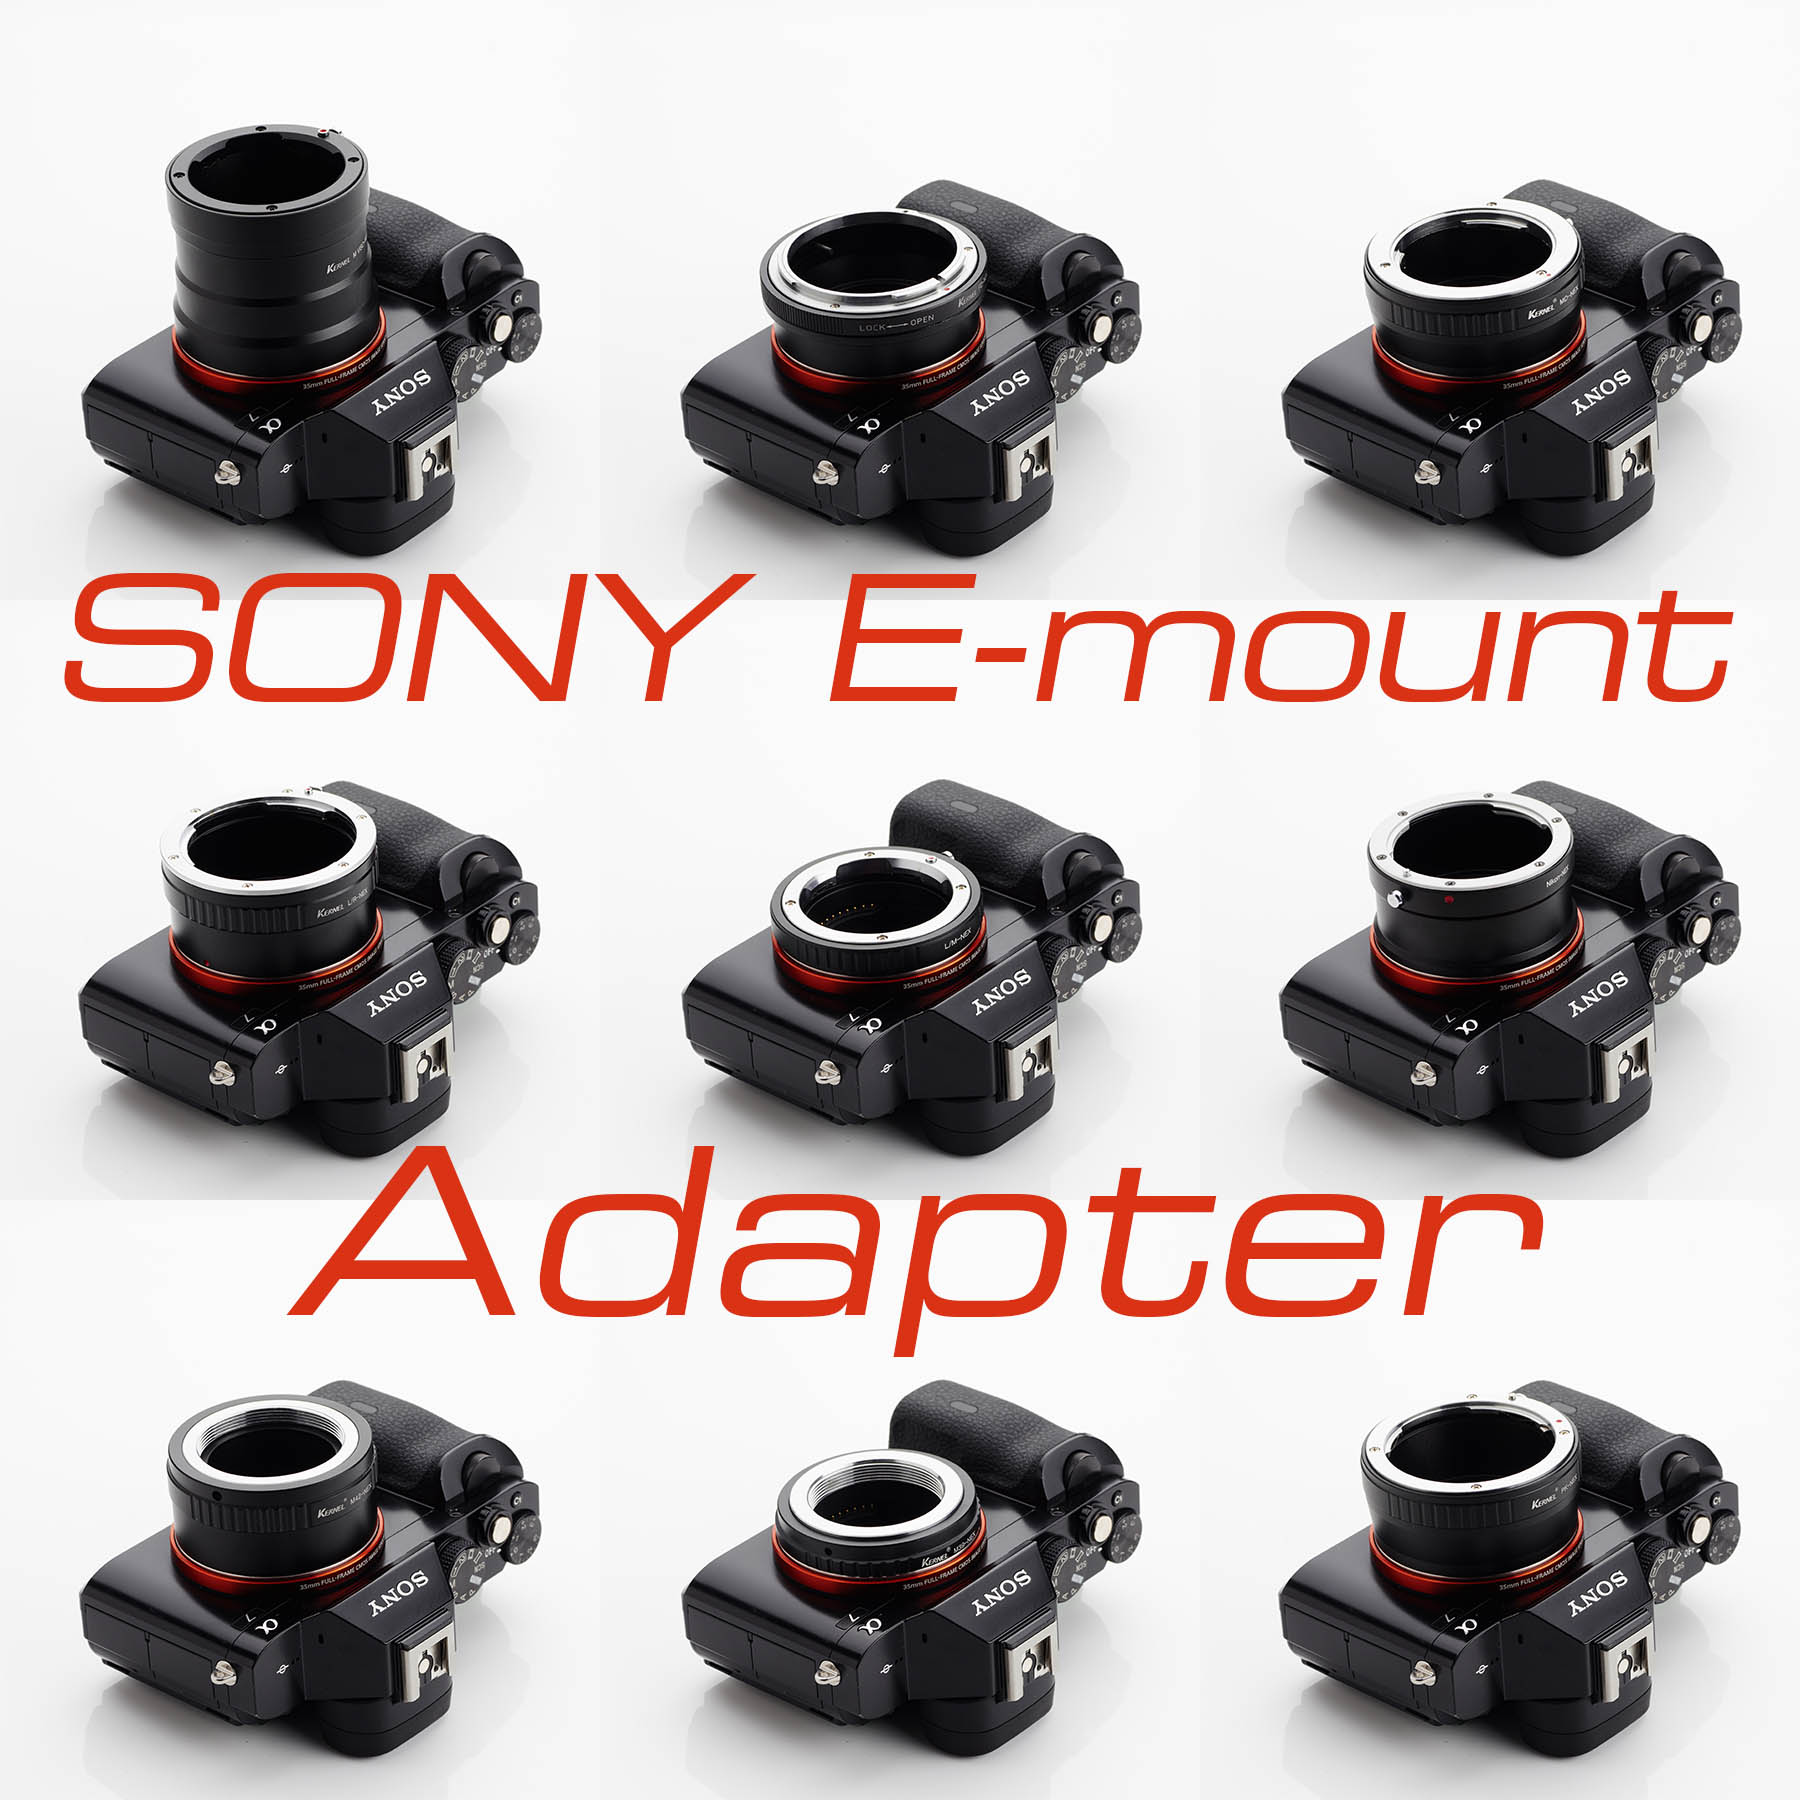 Sony Eマウント用マウントアダプタ | 使える機材のセレクトショップ 